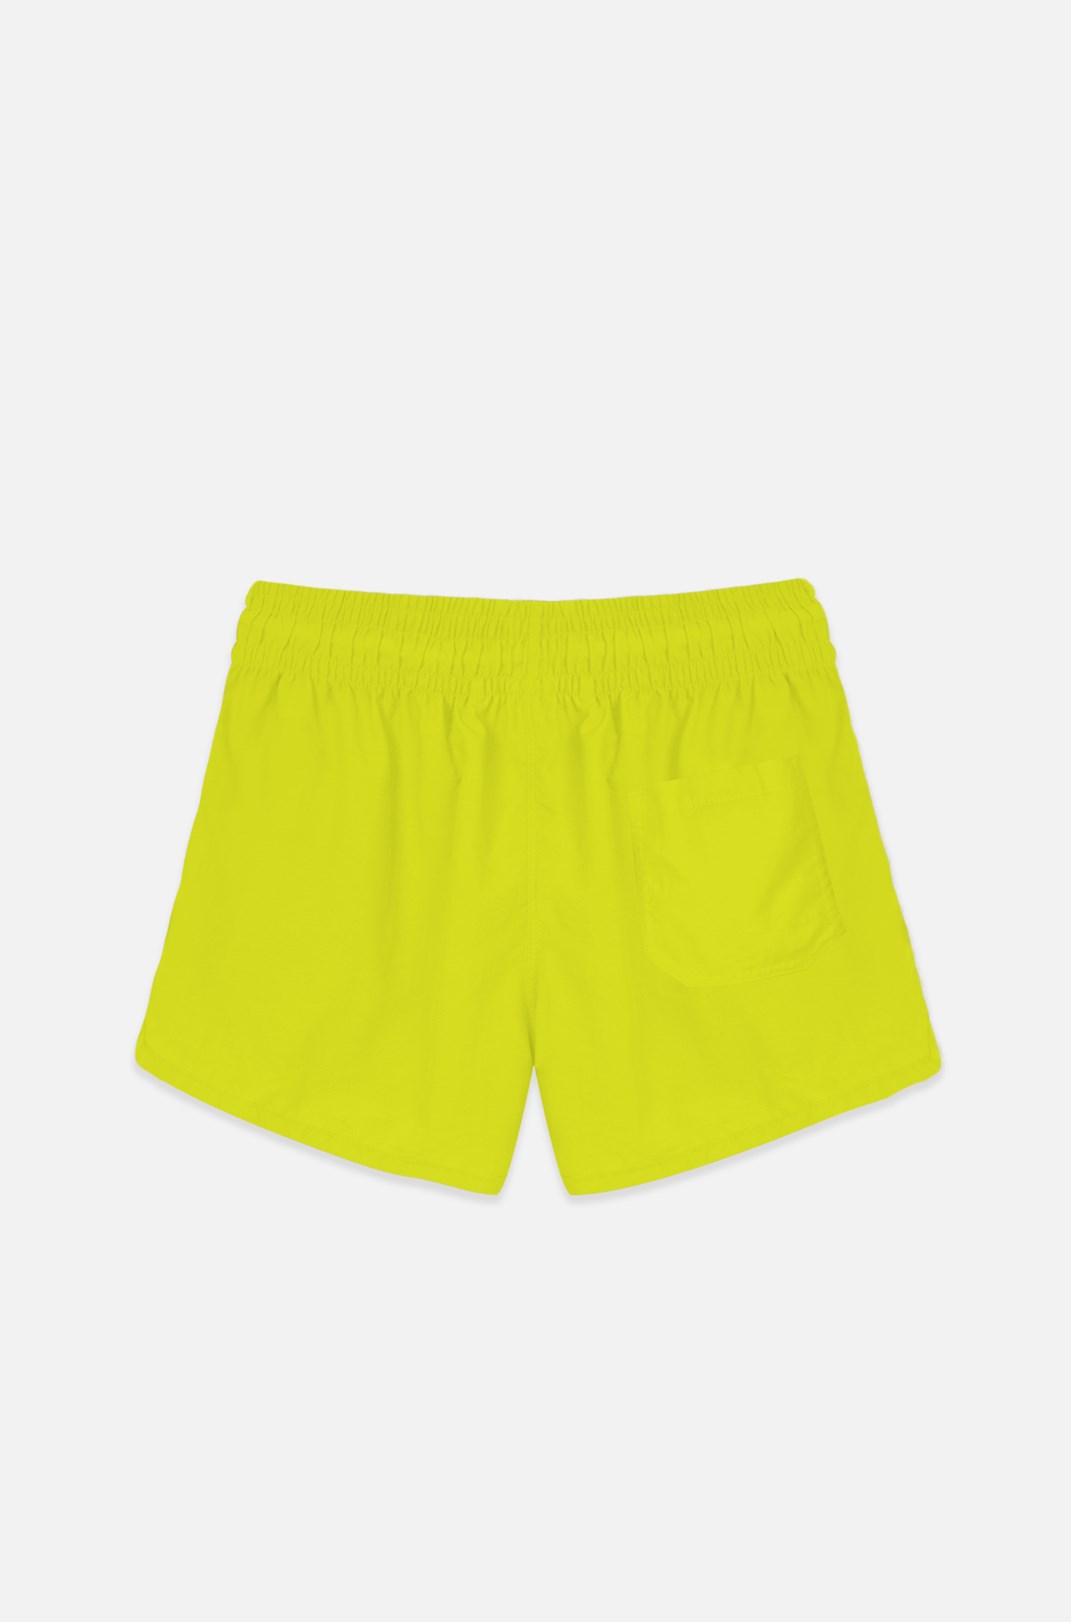 Shorts Approve Amarelo Neon